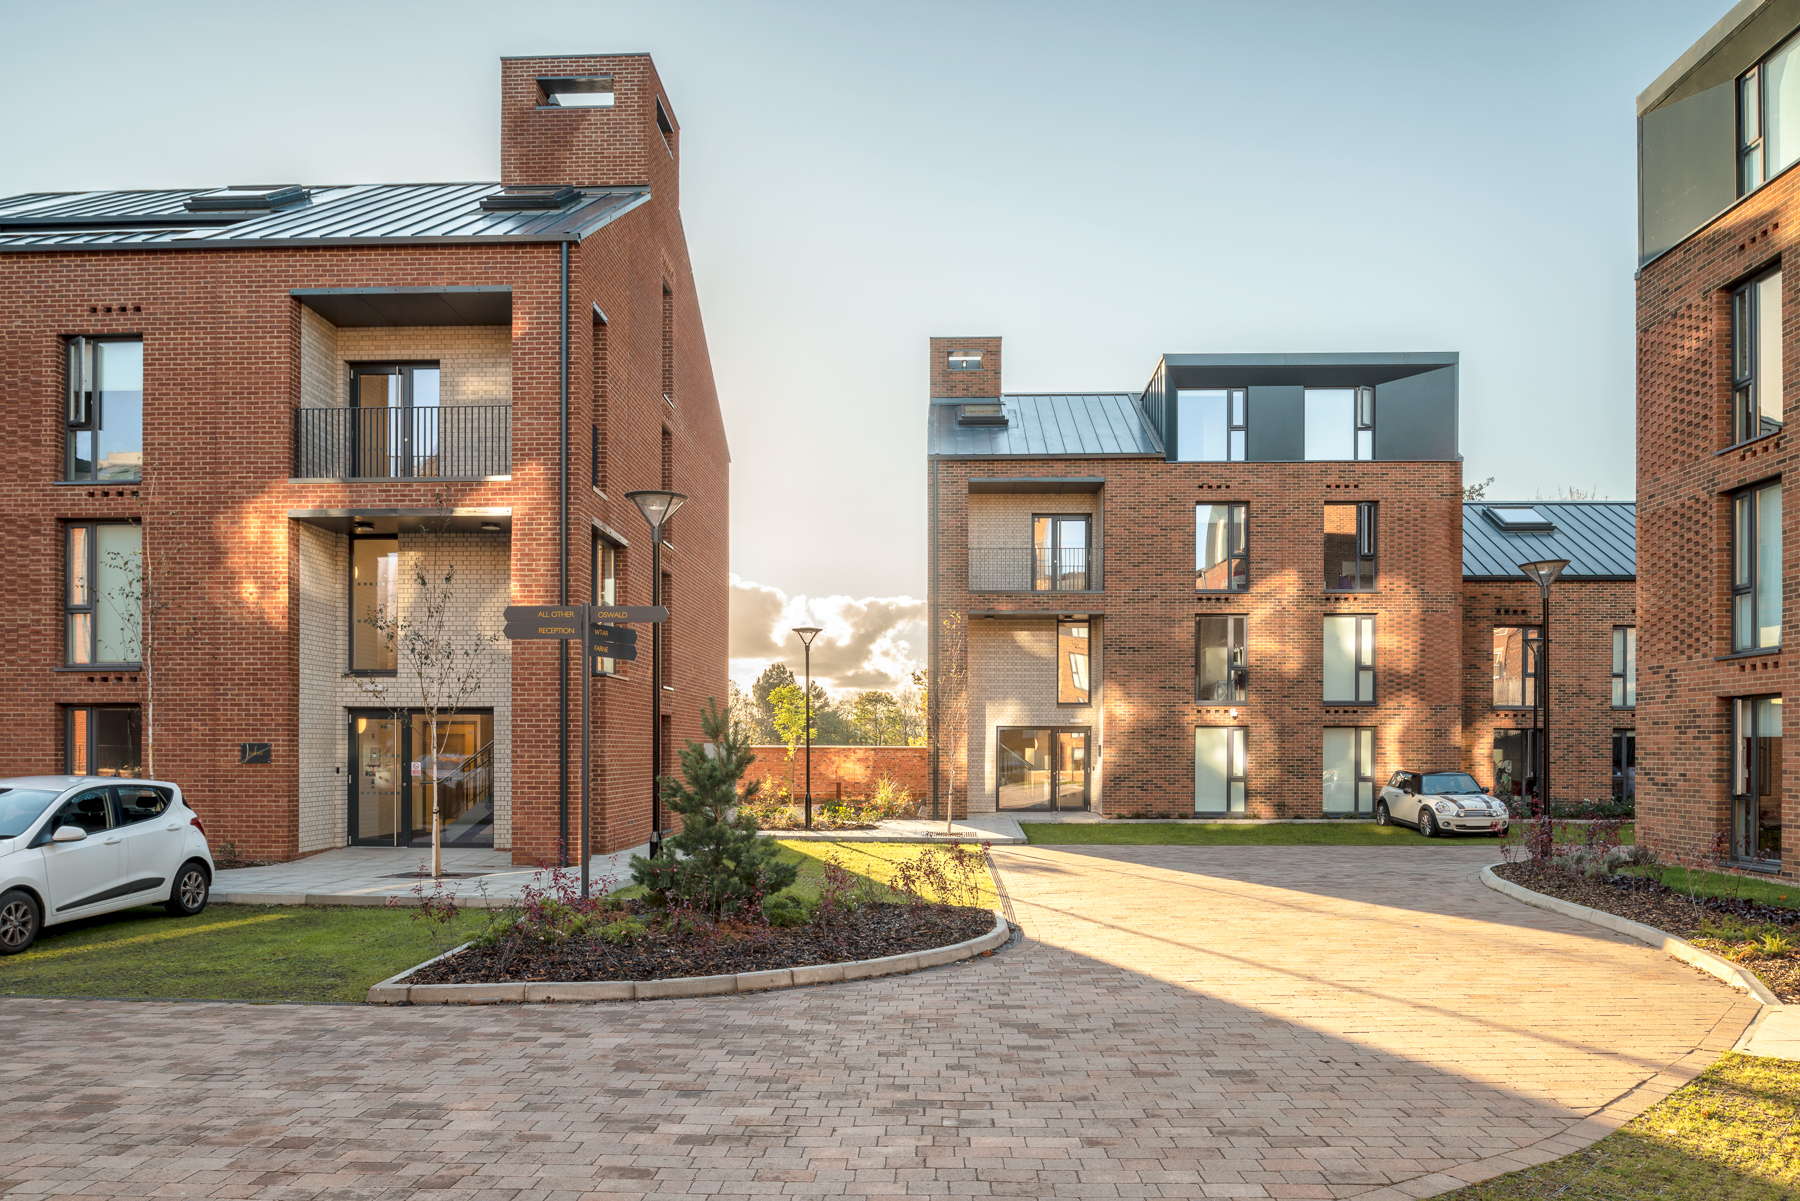  Student Accommodation | GWP Architecture | Durham, UK 